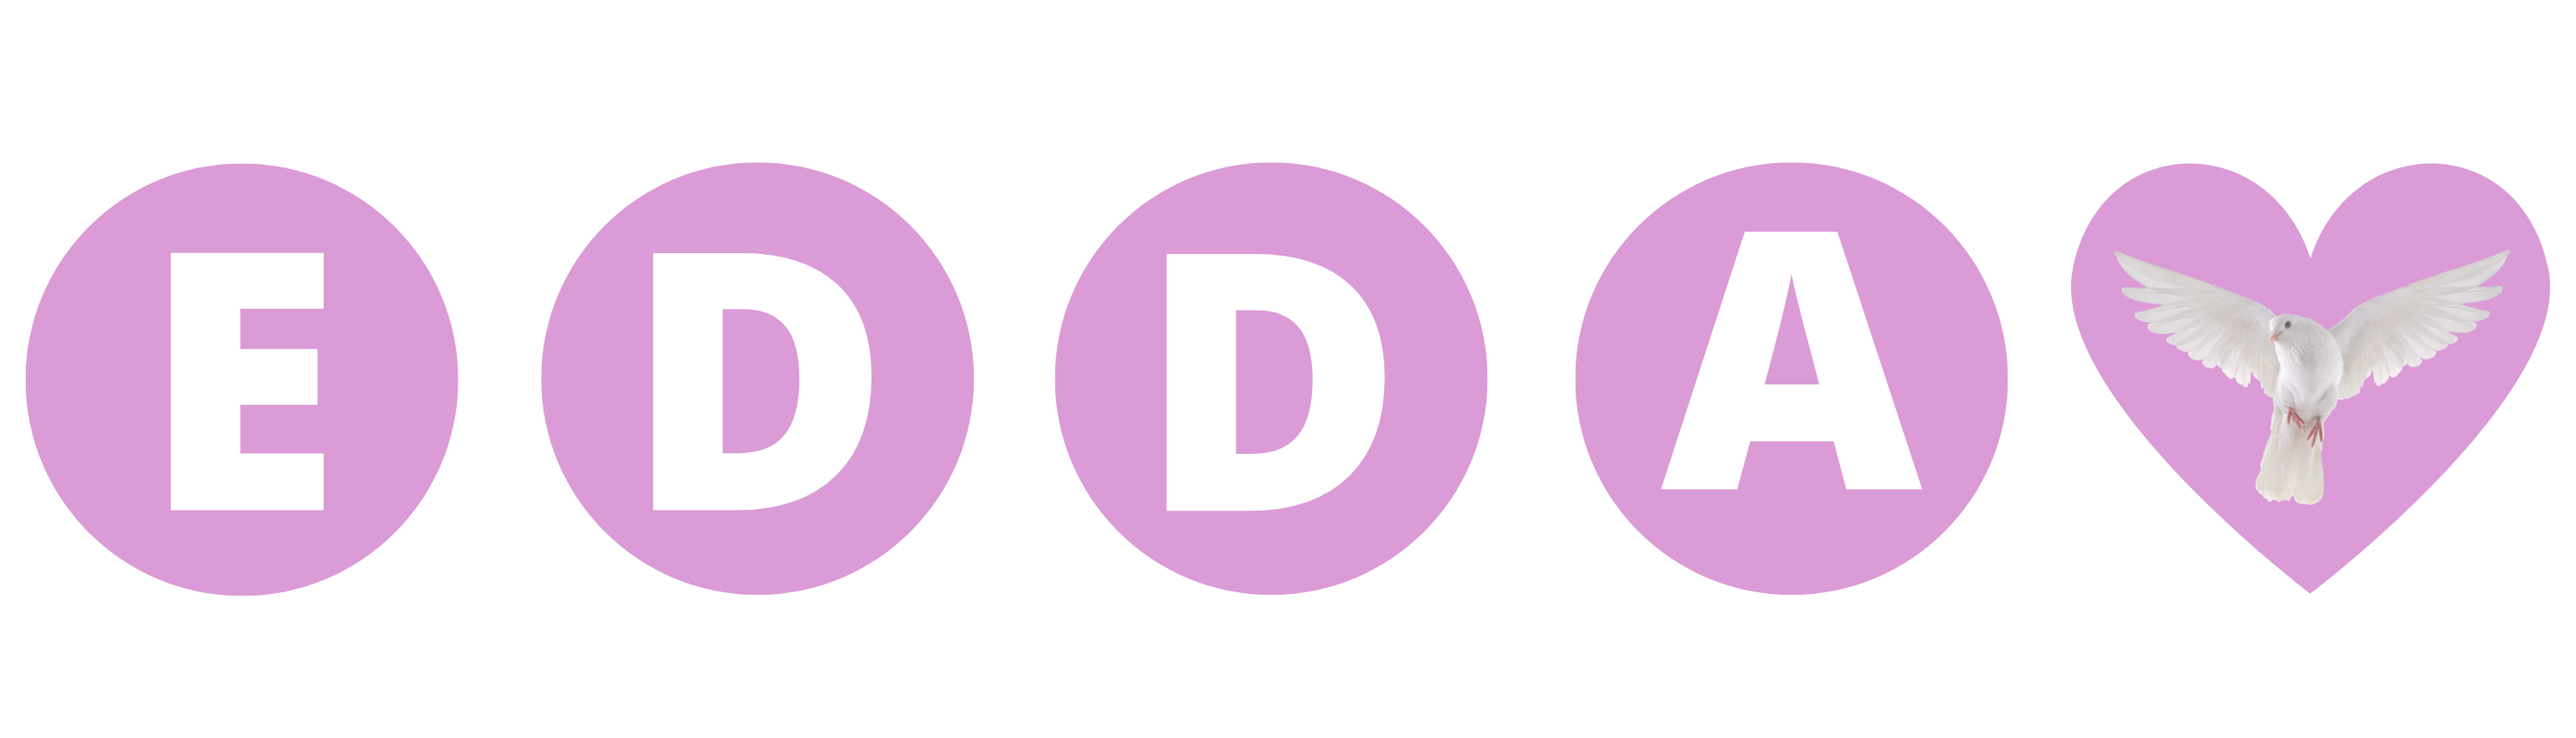 Edda Logo dove